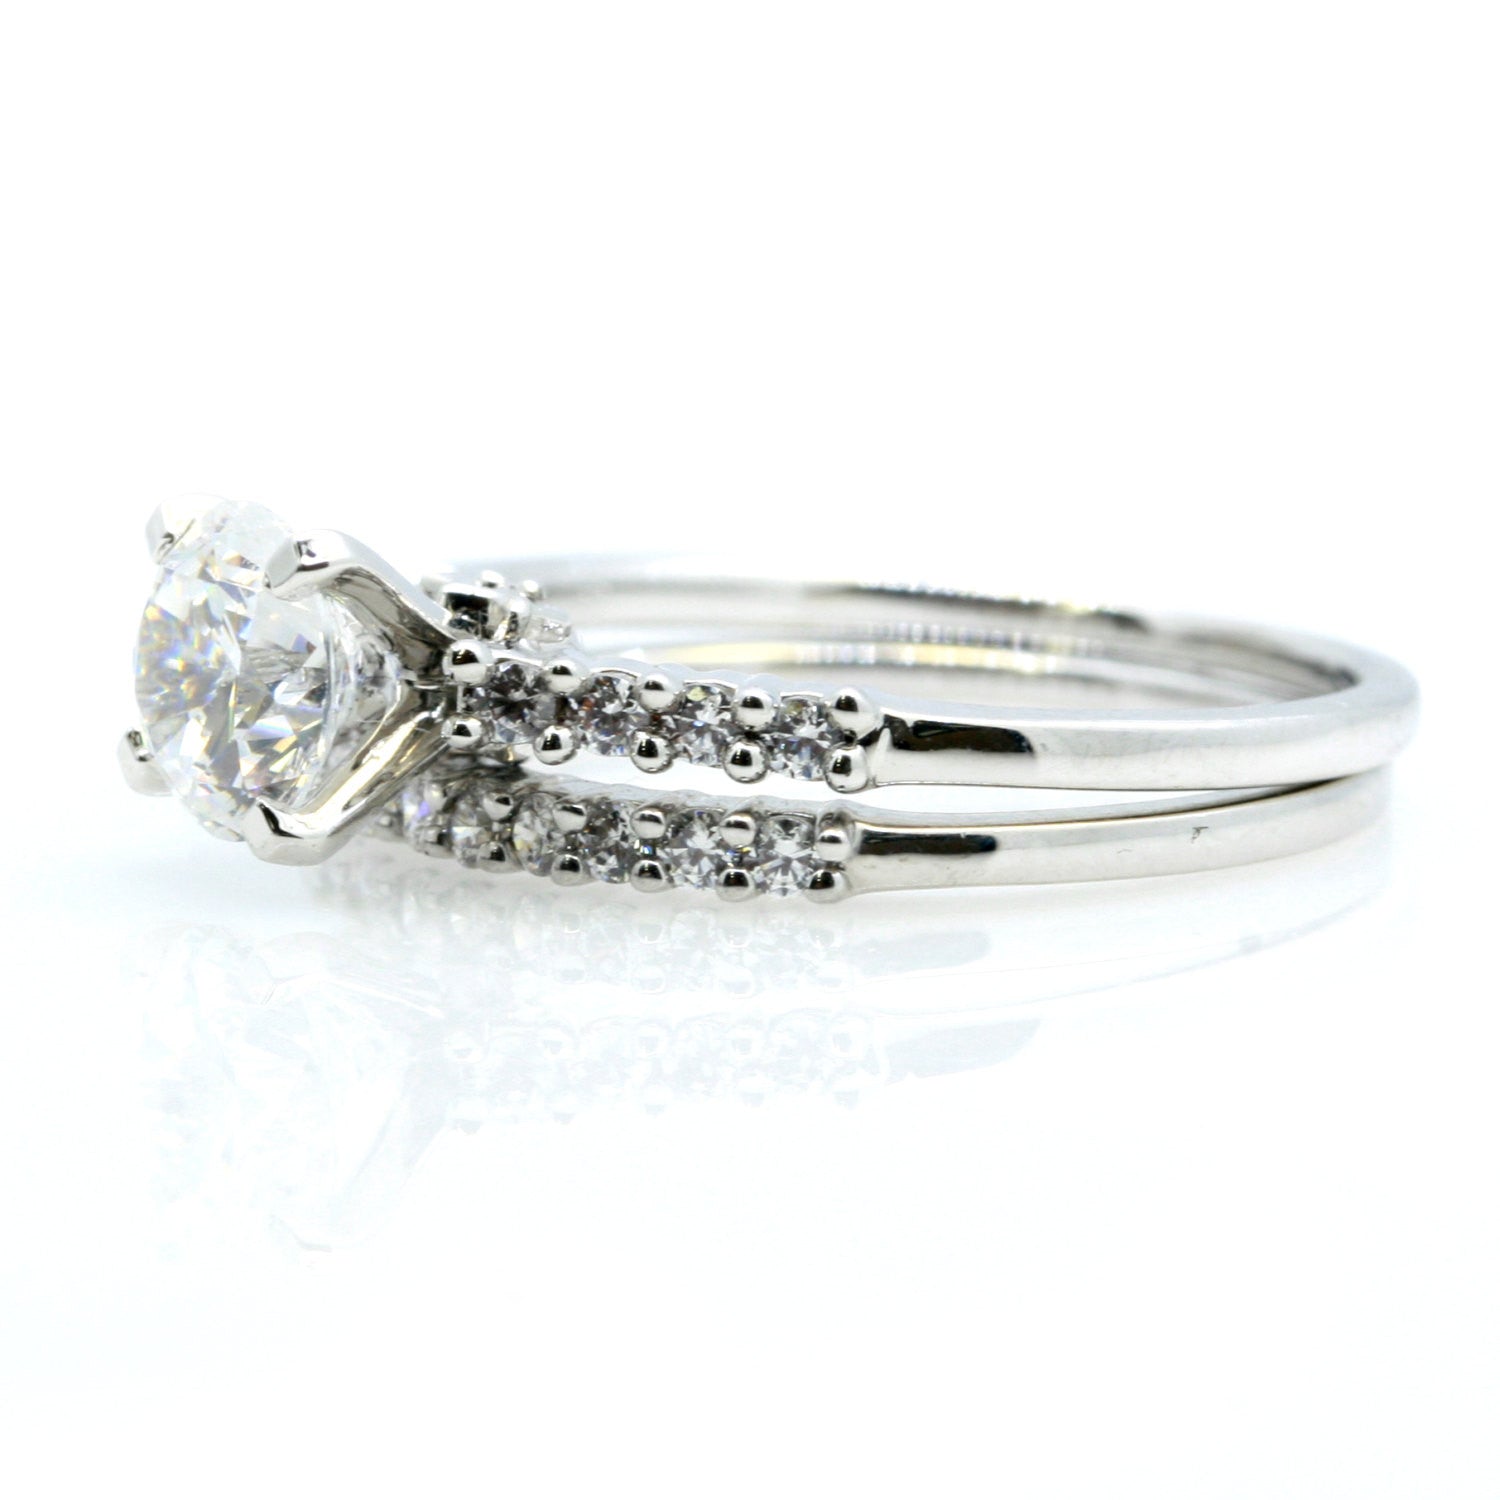 Moissanite Engagement Ring Wedding Set, Solitaire With 1 Carat Forever Brilliant Moissanite & .40 Carat Diamonds - FB76298